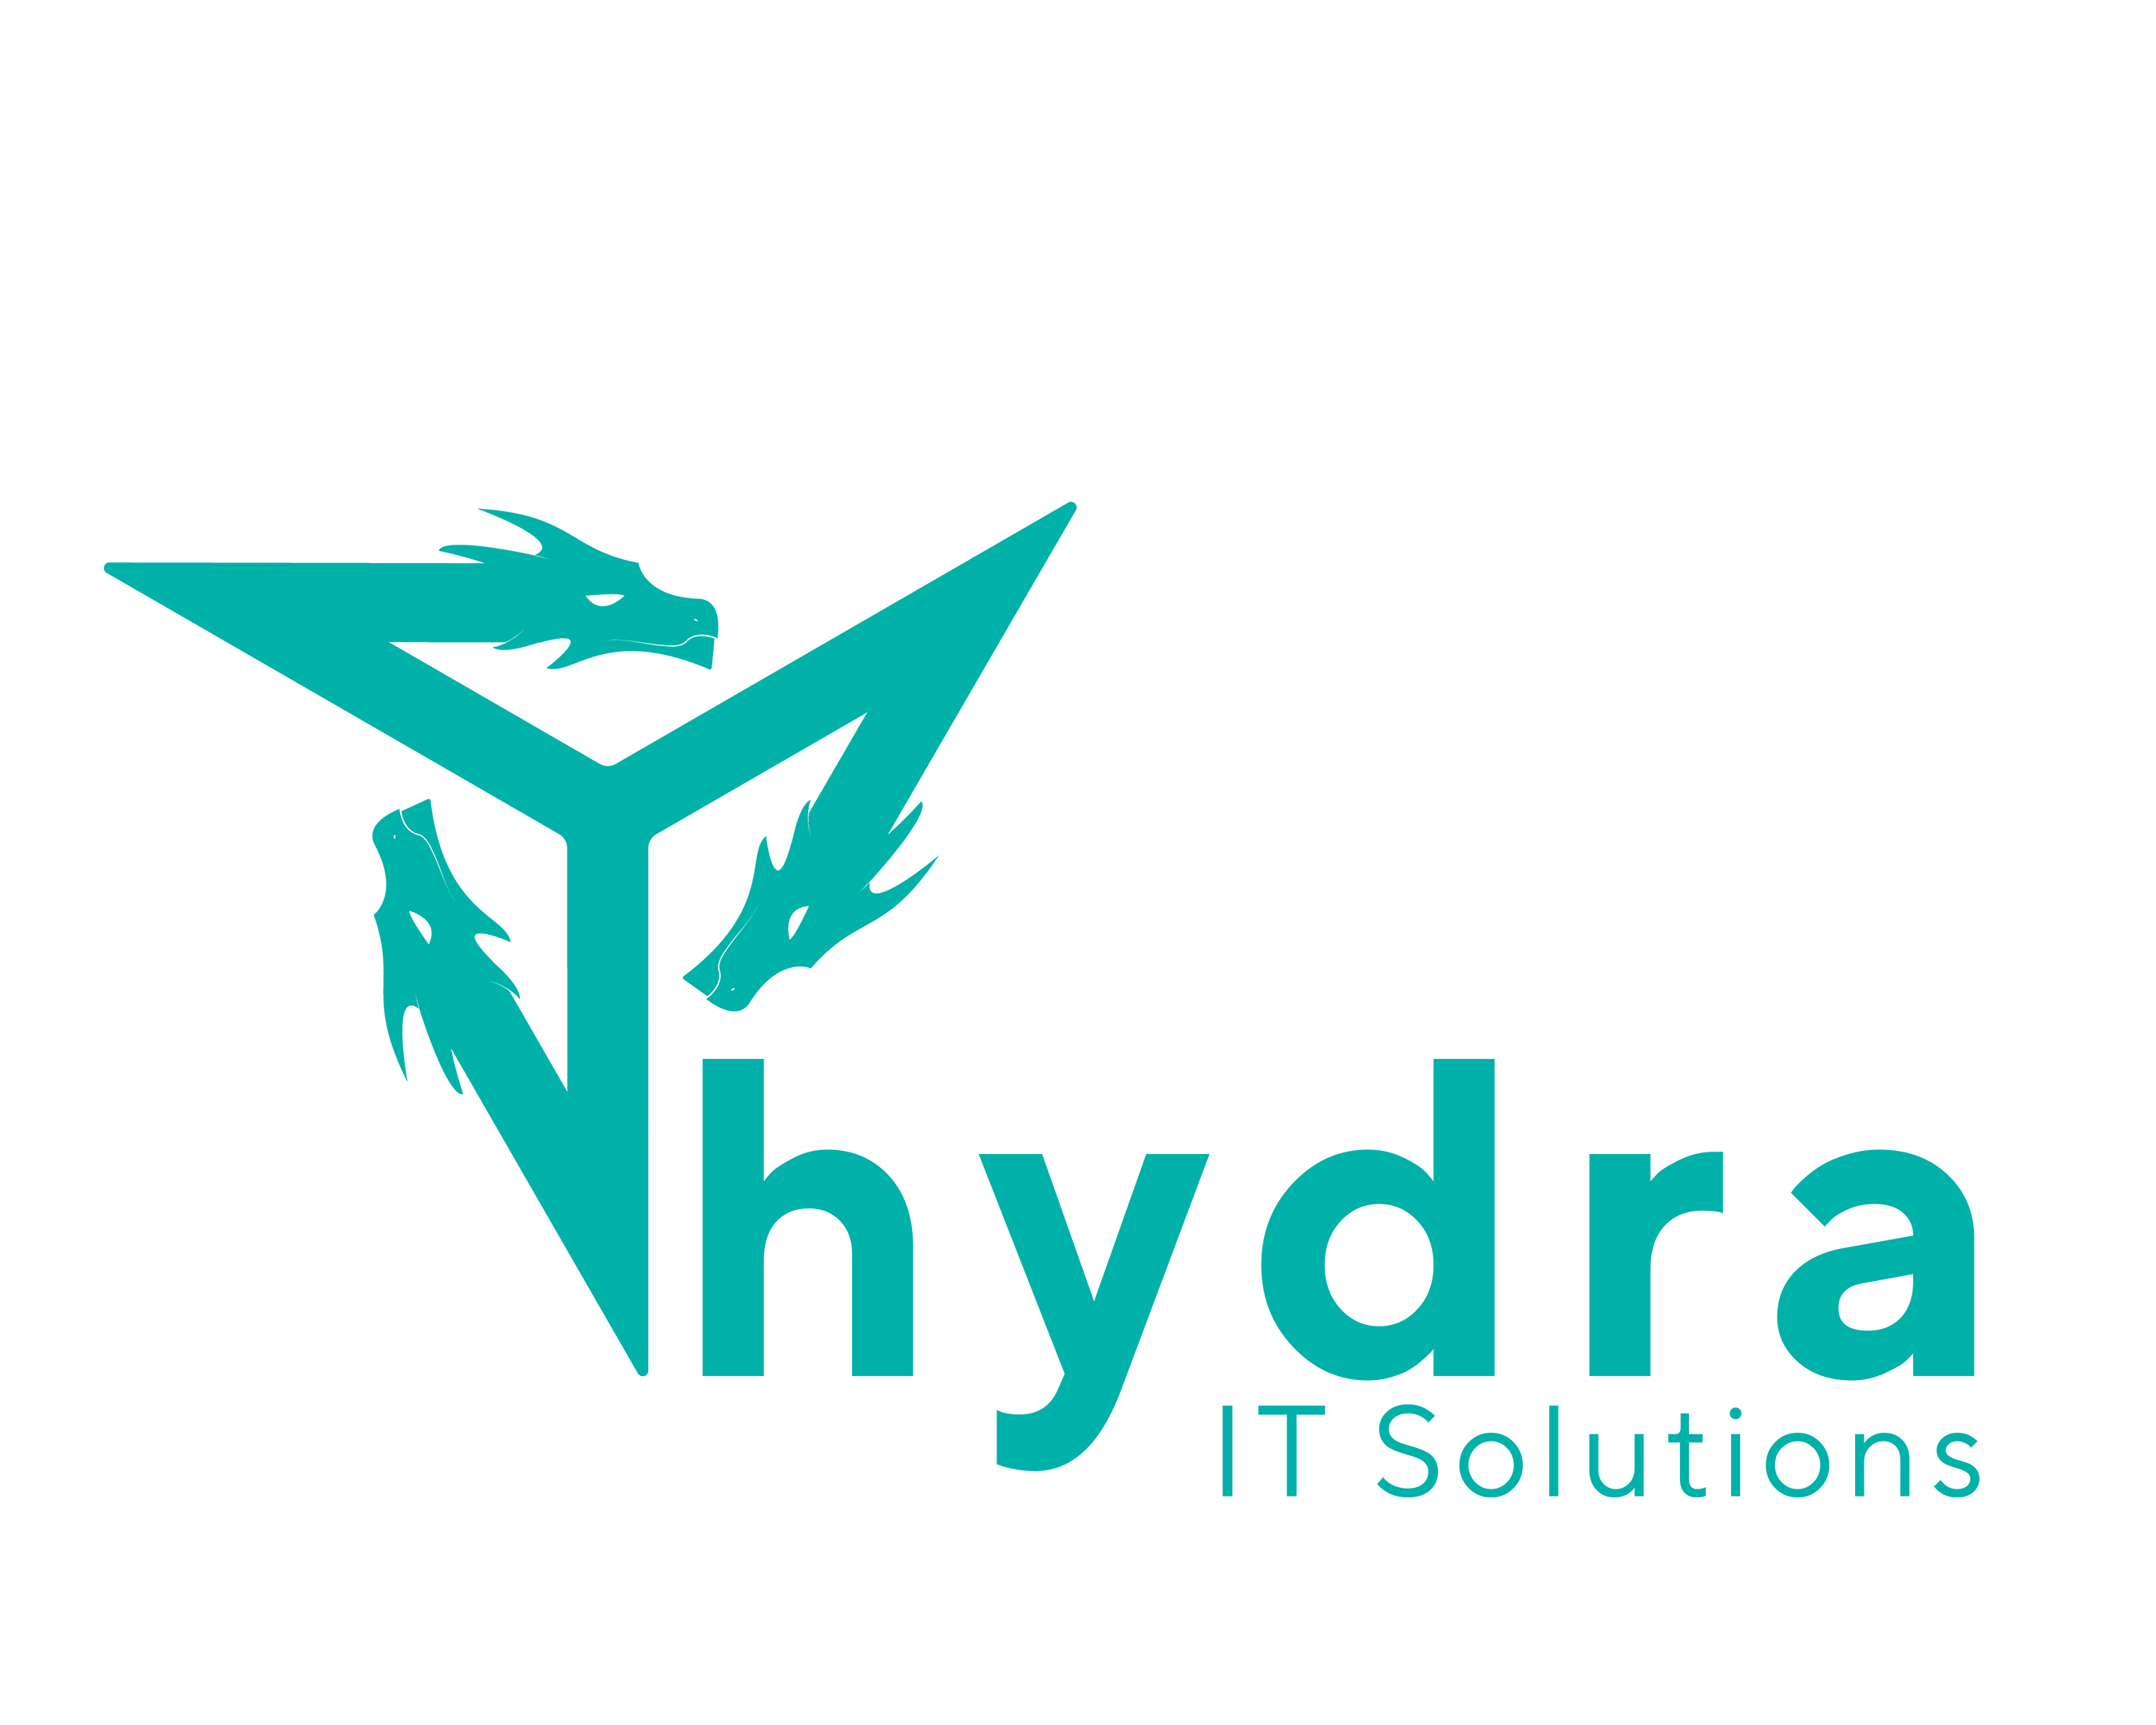 Hydra IT Solutions